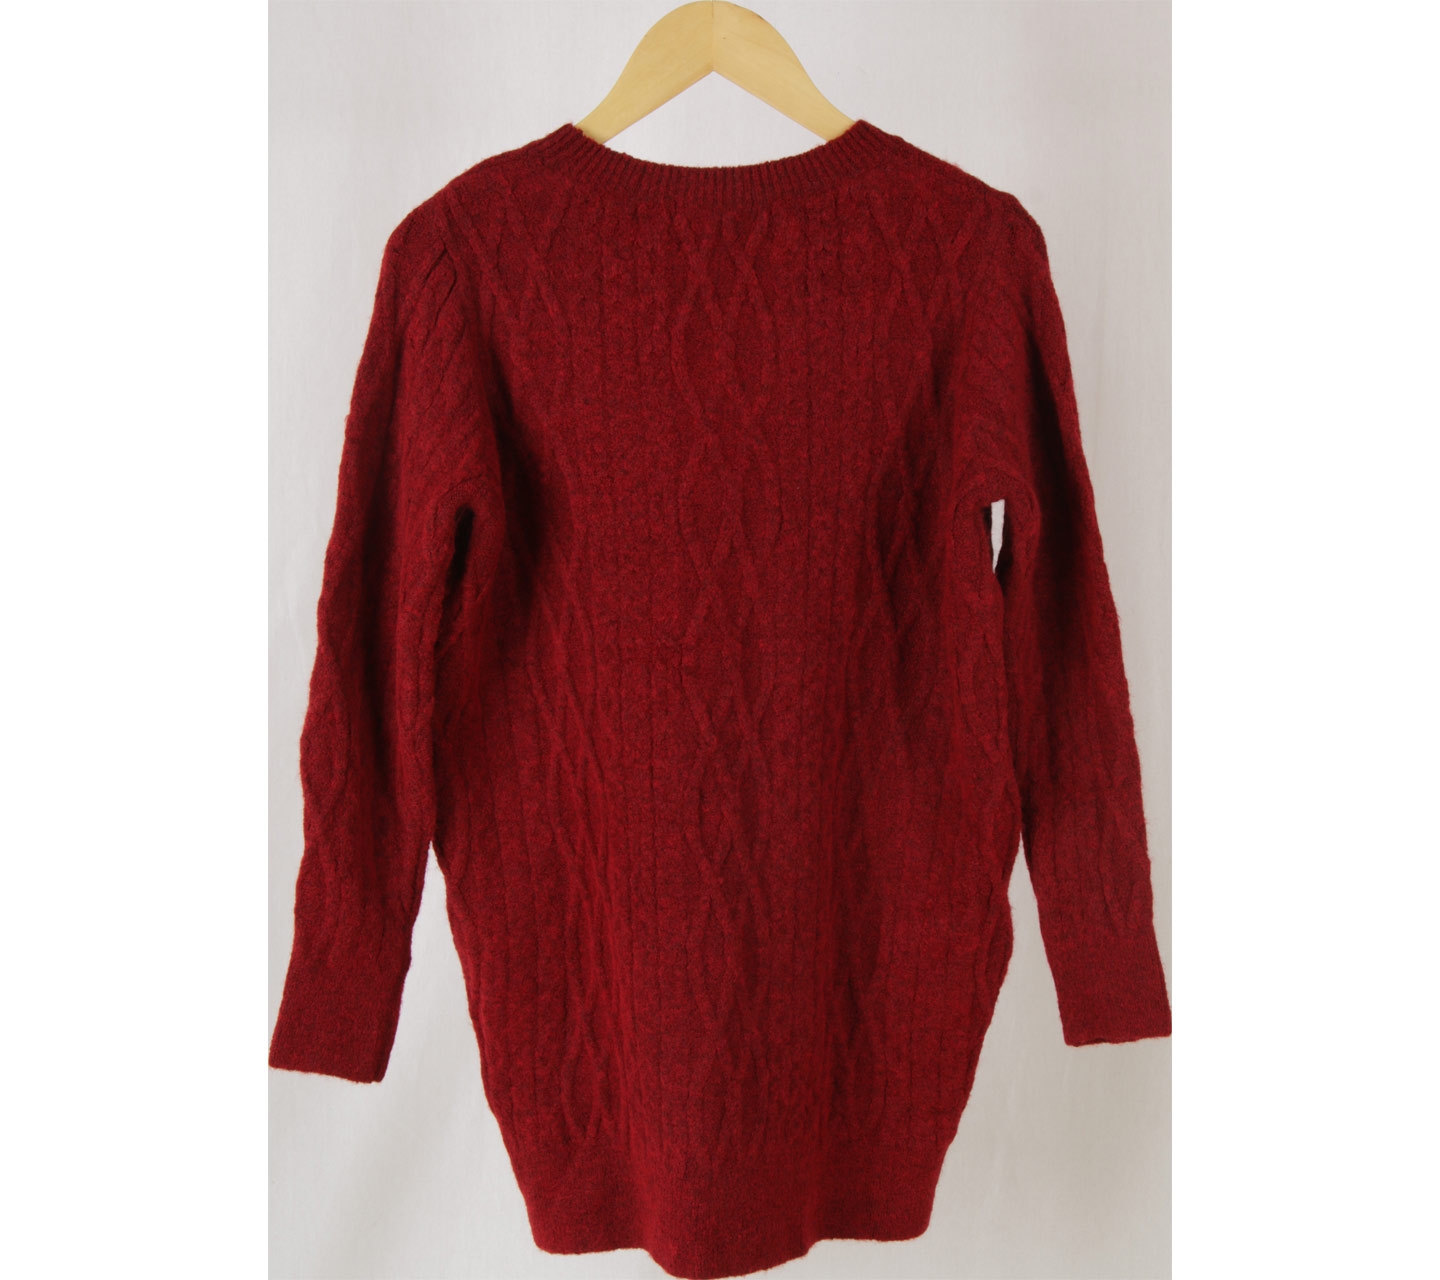 Zara Red Knit Sweater